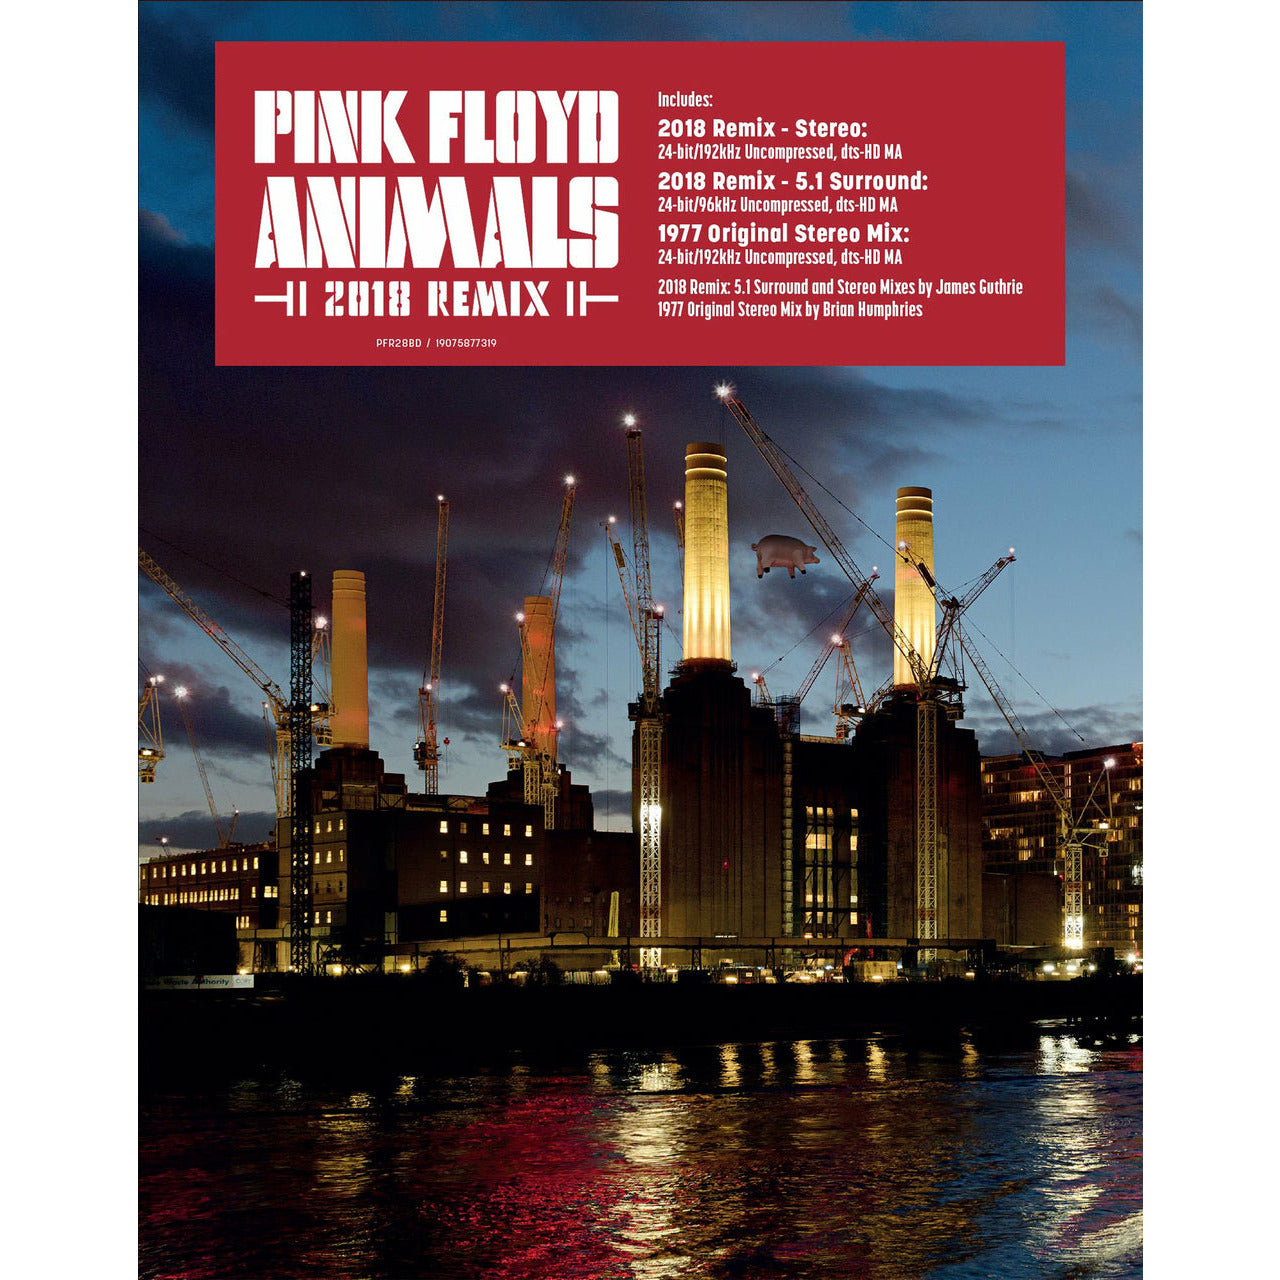 Pink Floyd - Animals (2018 Remix) - Blu-Ray